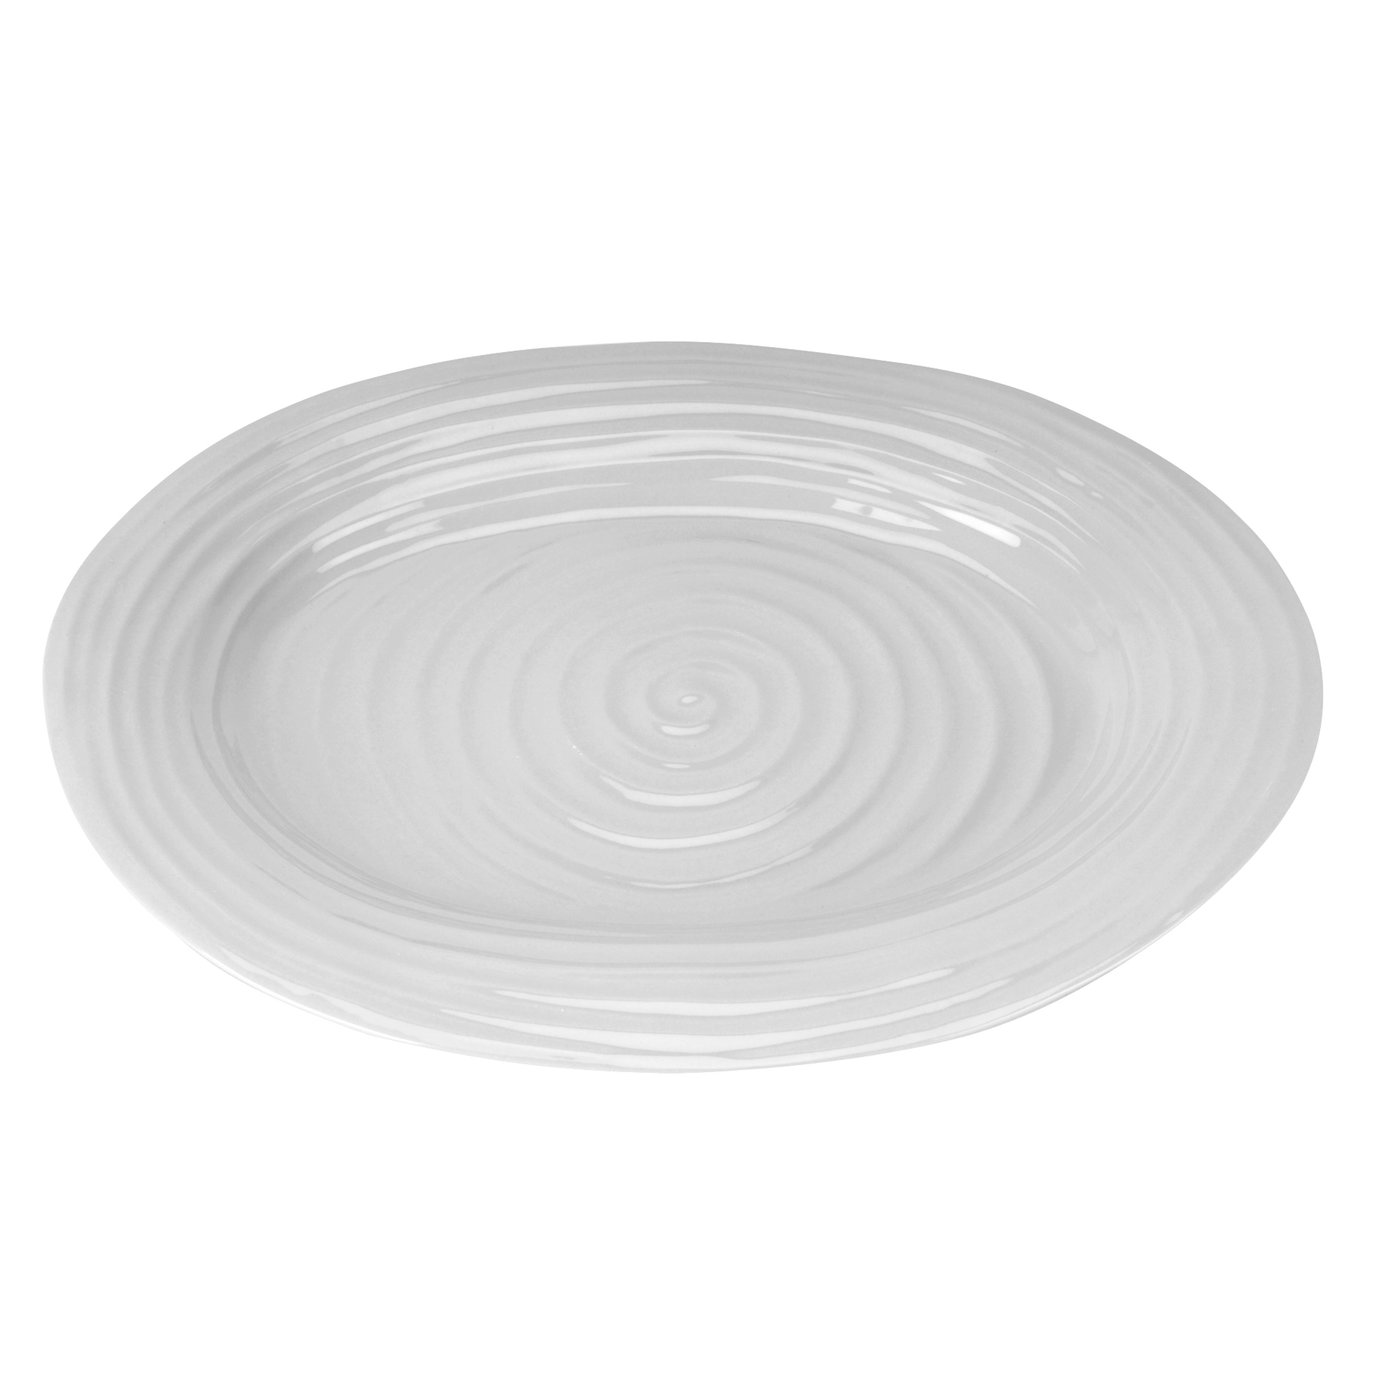 Portmeirion Sophie Conran Grey Large Oval Platter image number null